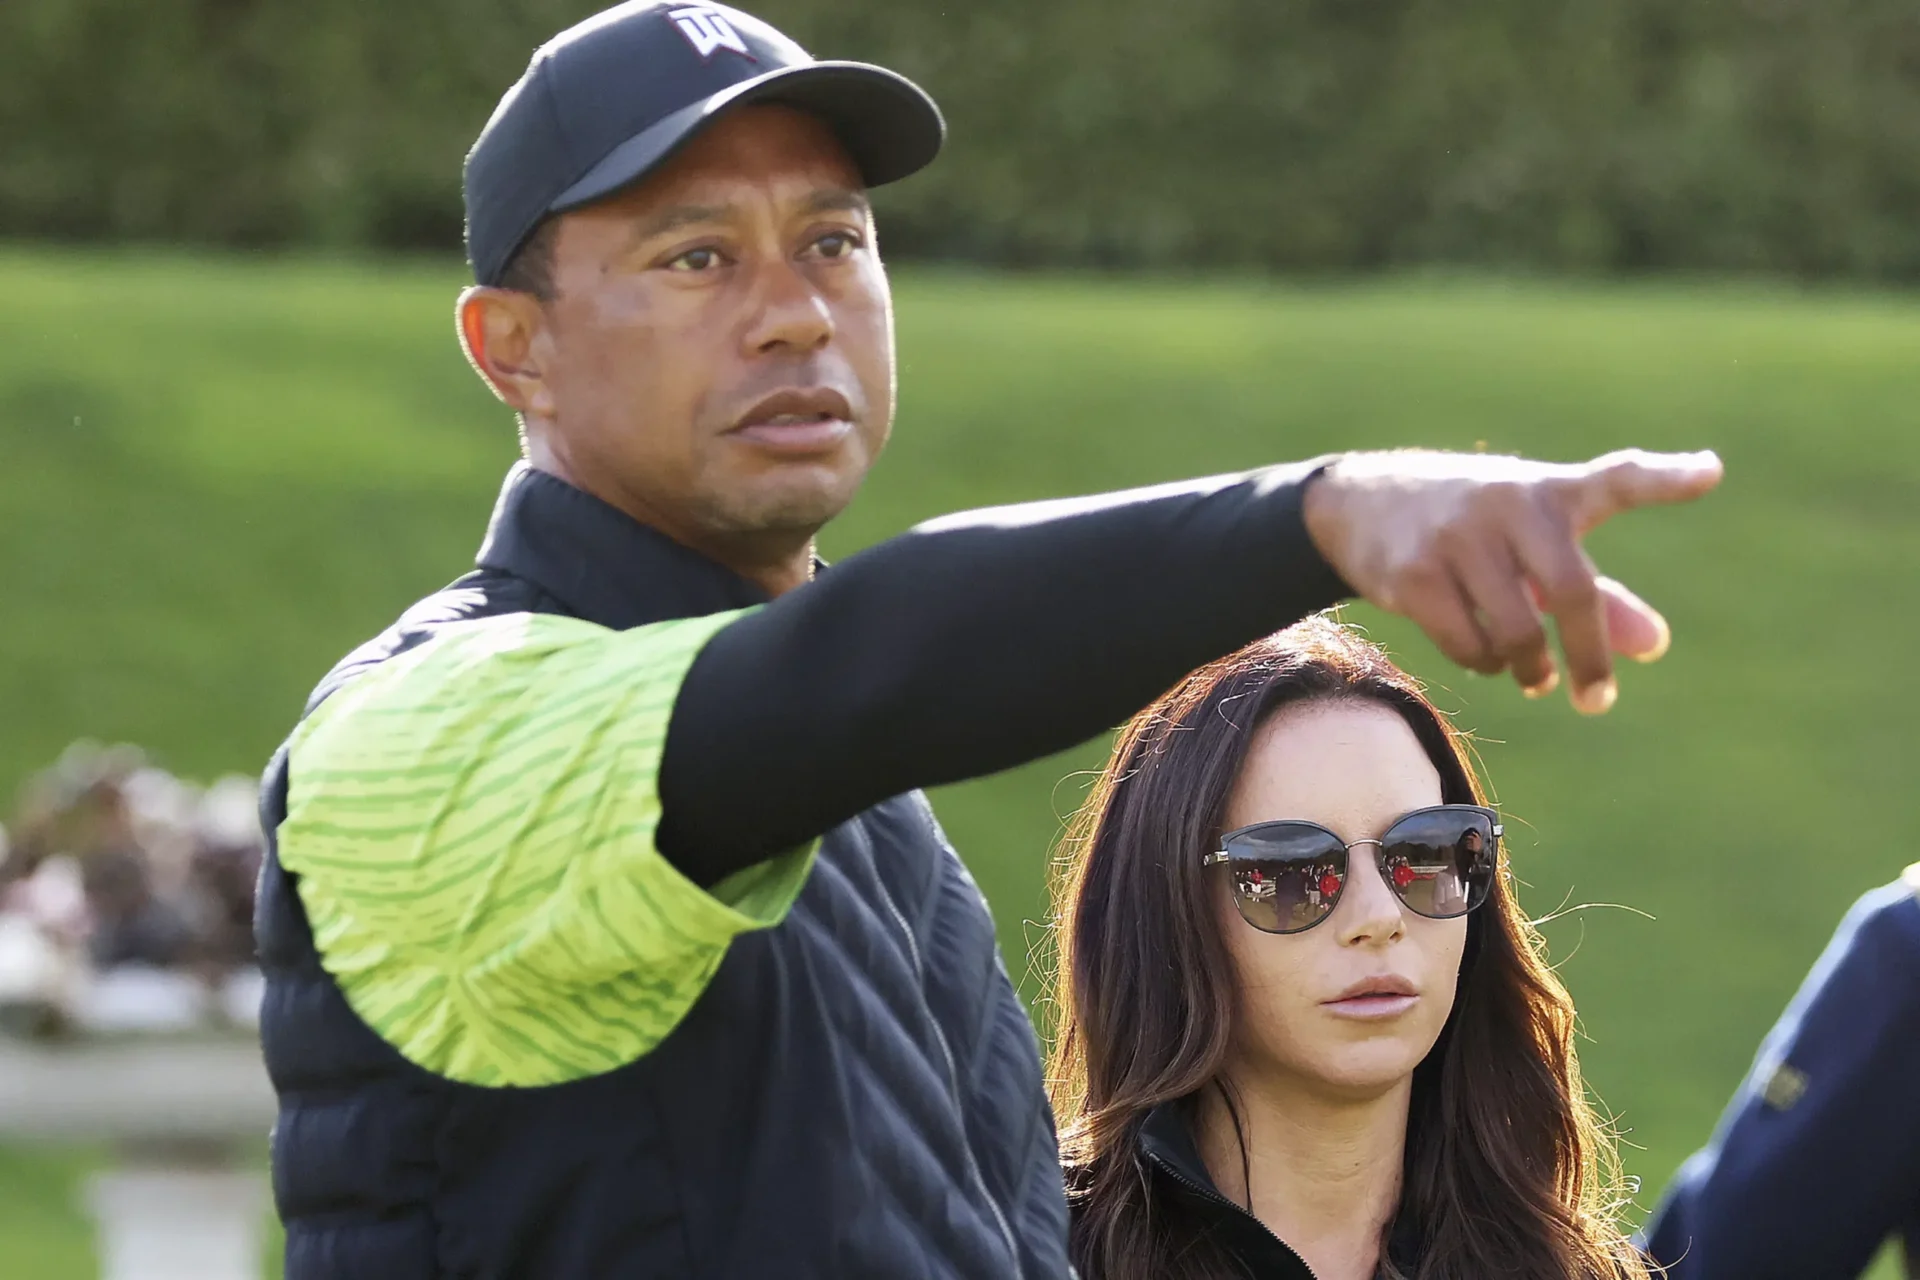 Ex novia: Tiger Woods usó un abogado para romper conmigo